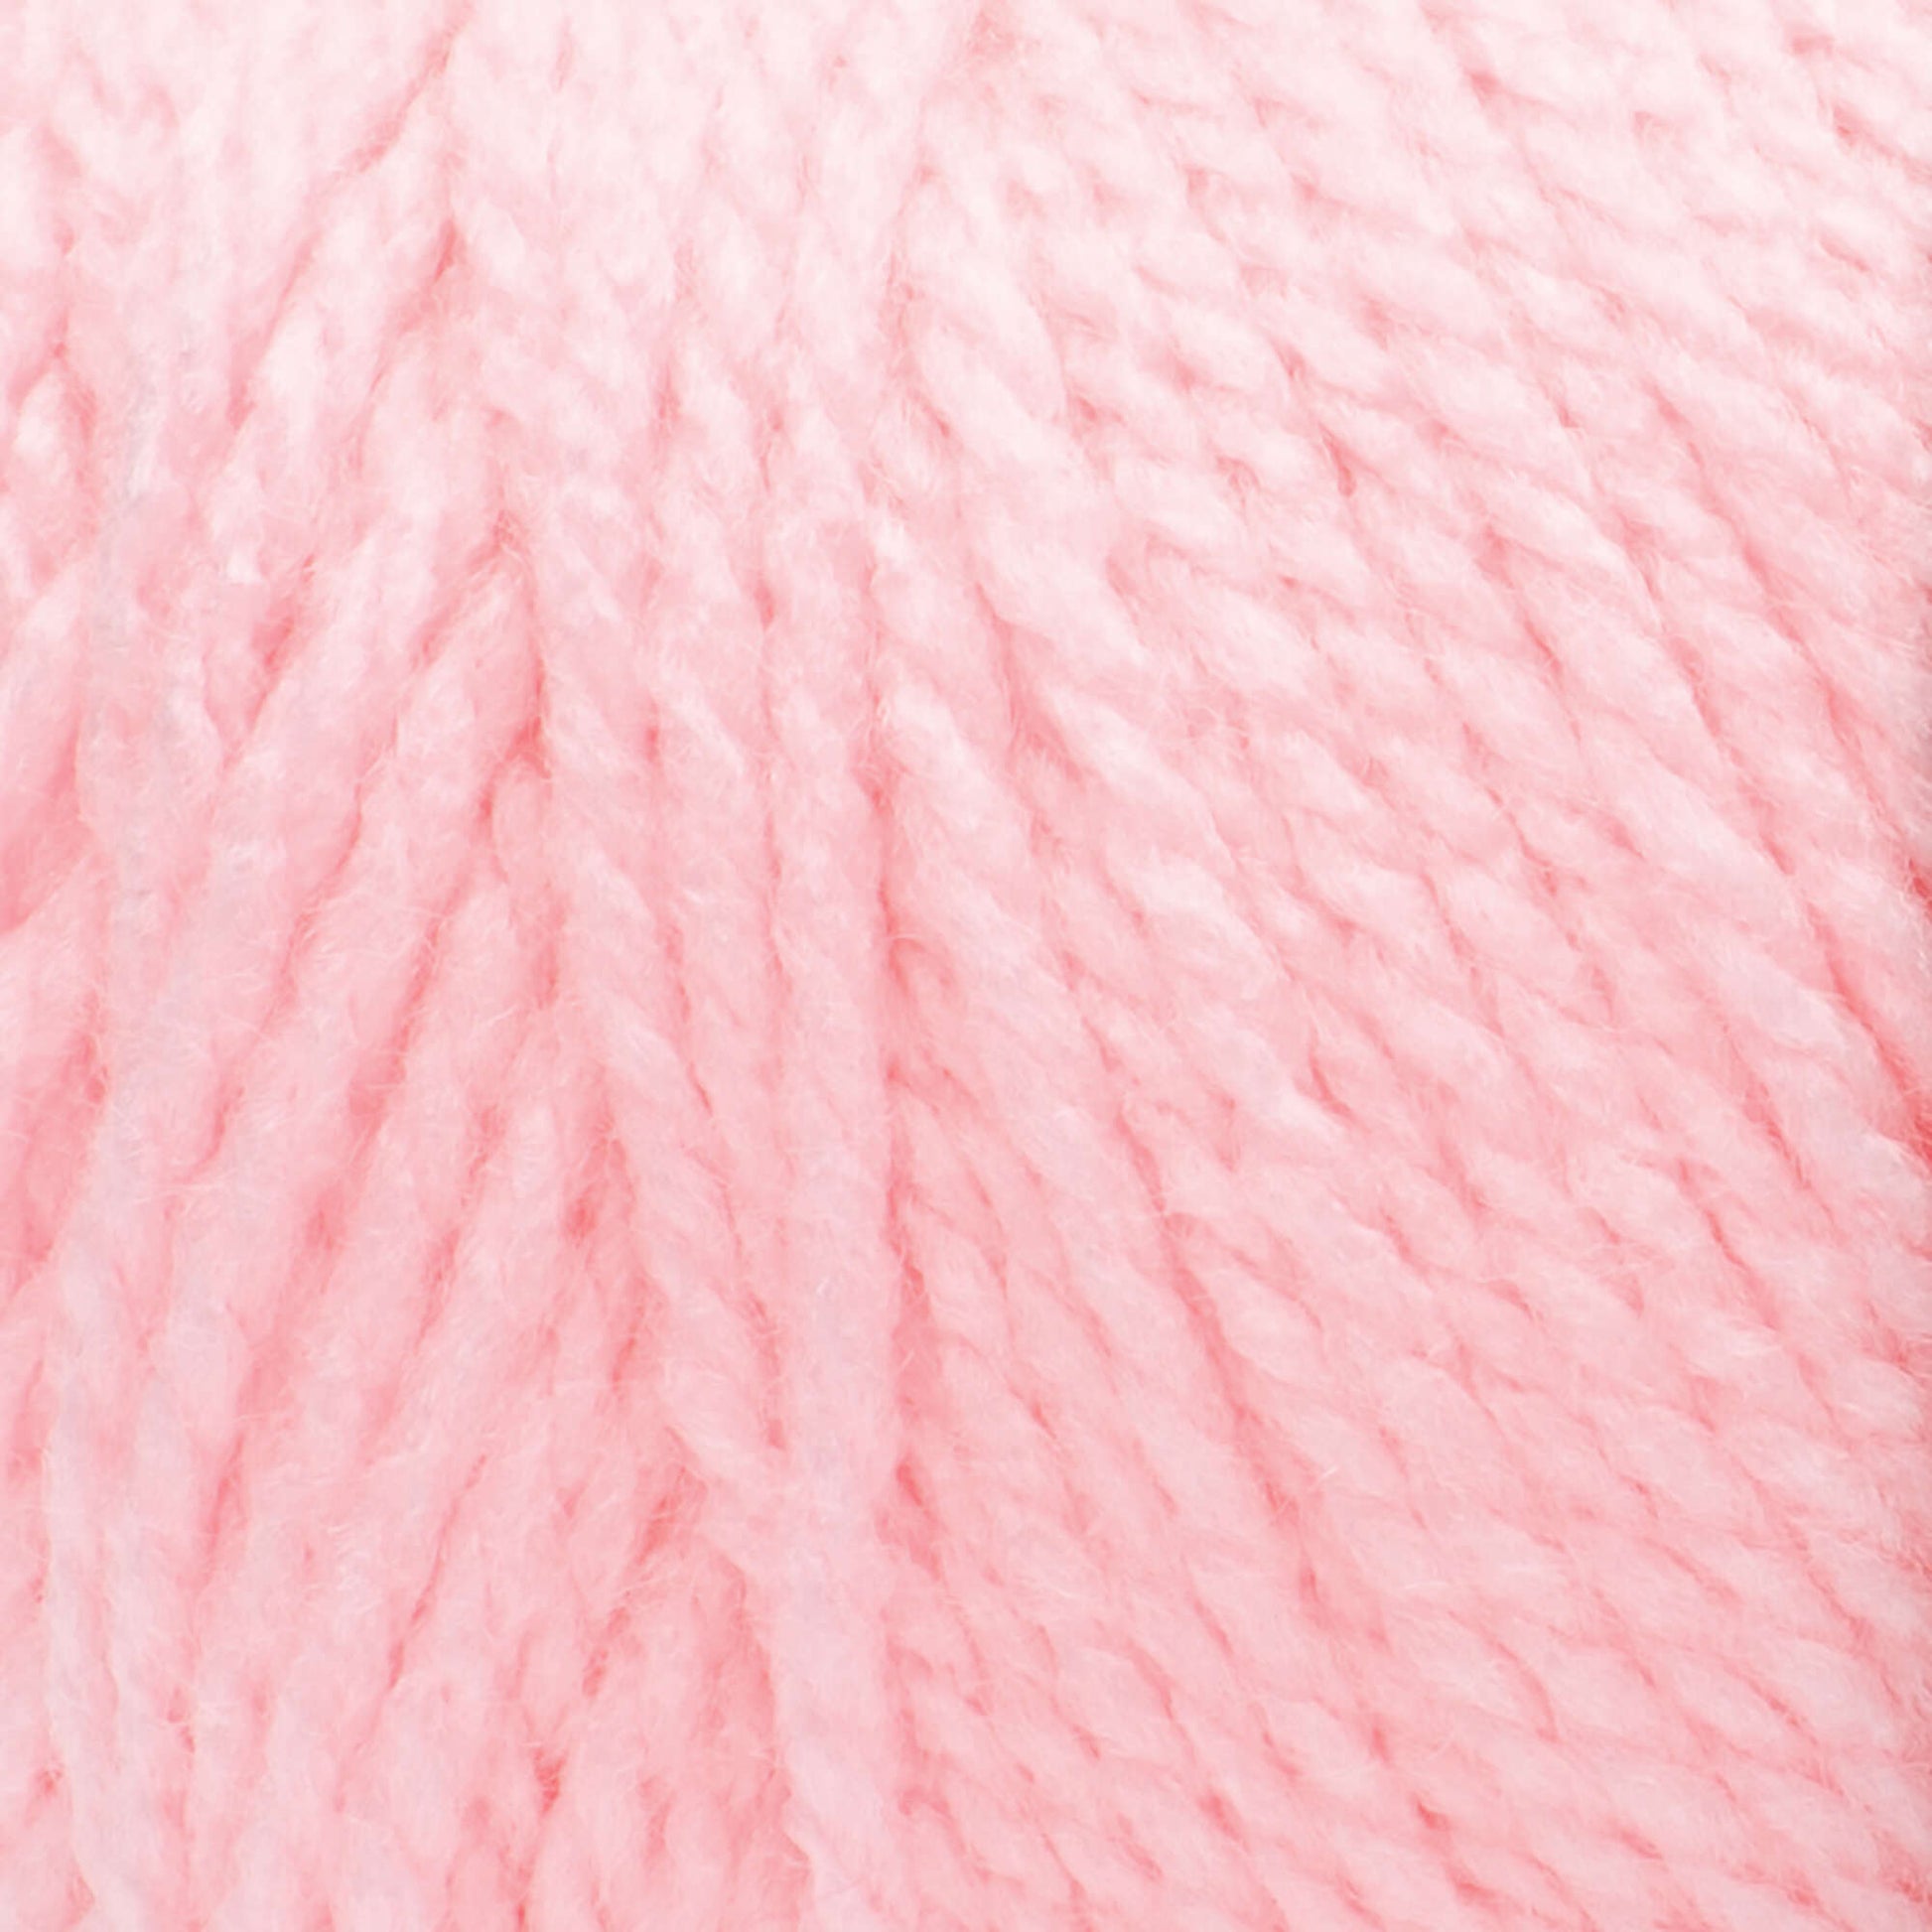 Red Heart Super Saver Chunky Yarn - Clearance shades Petal Pink